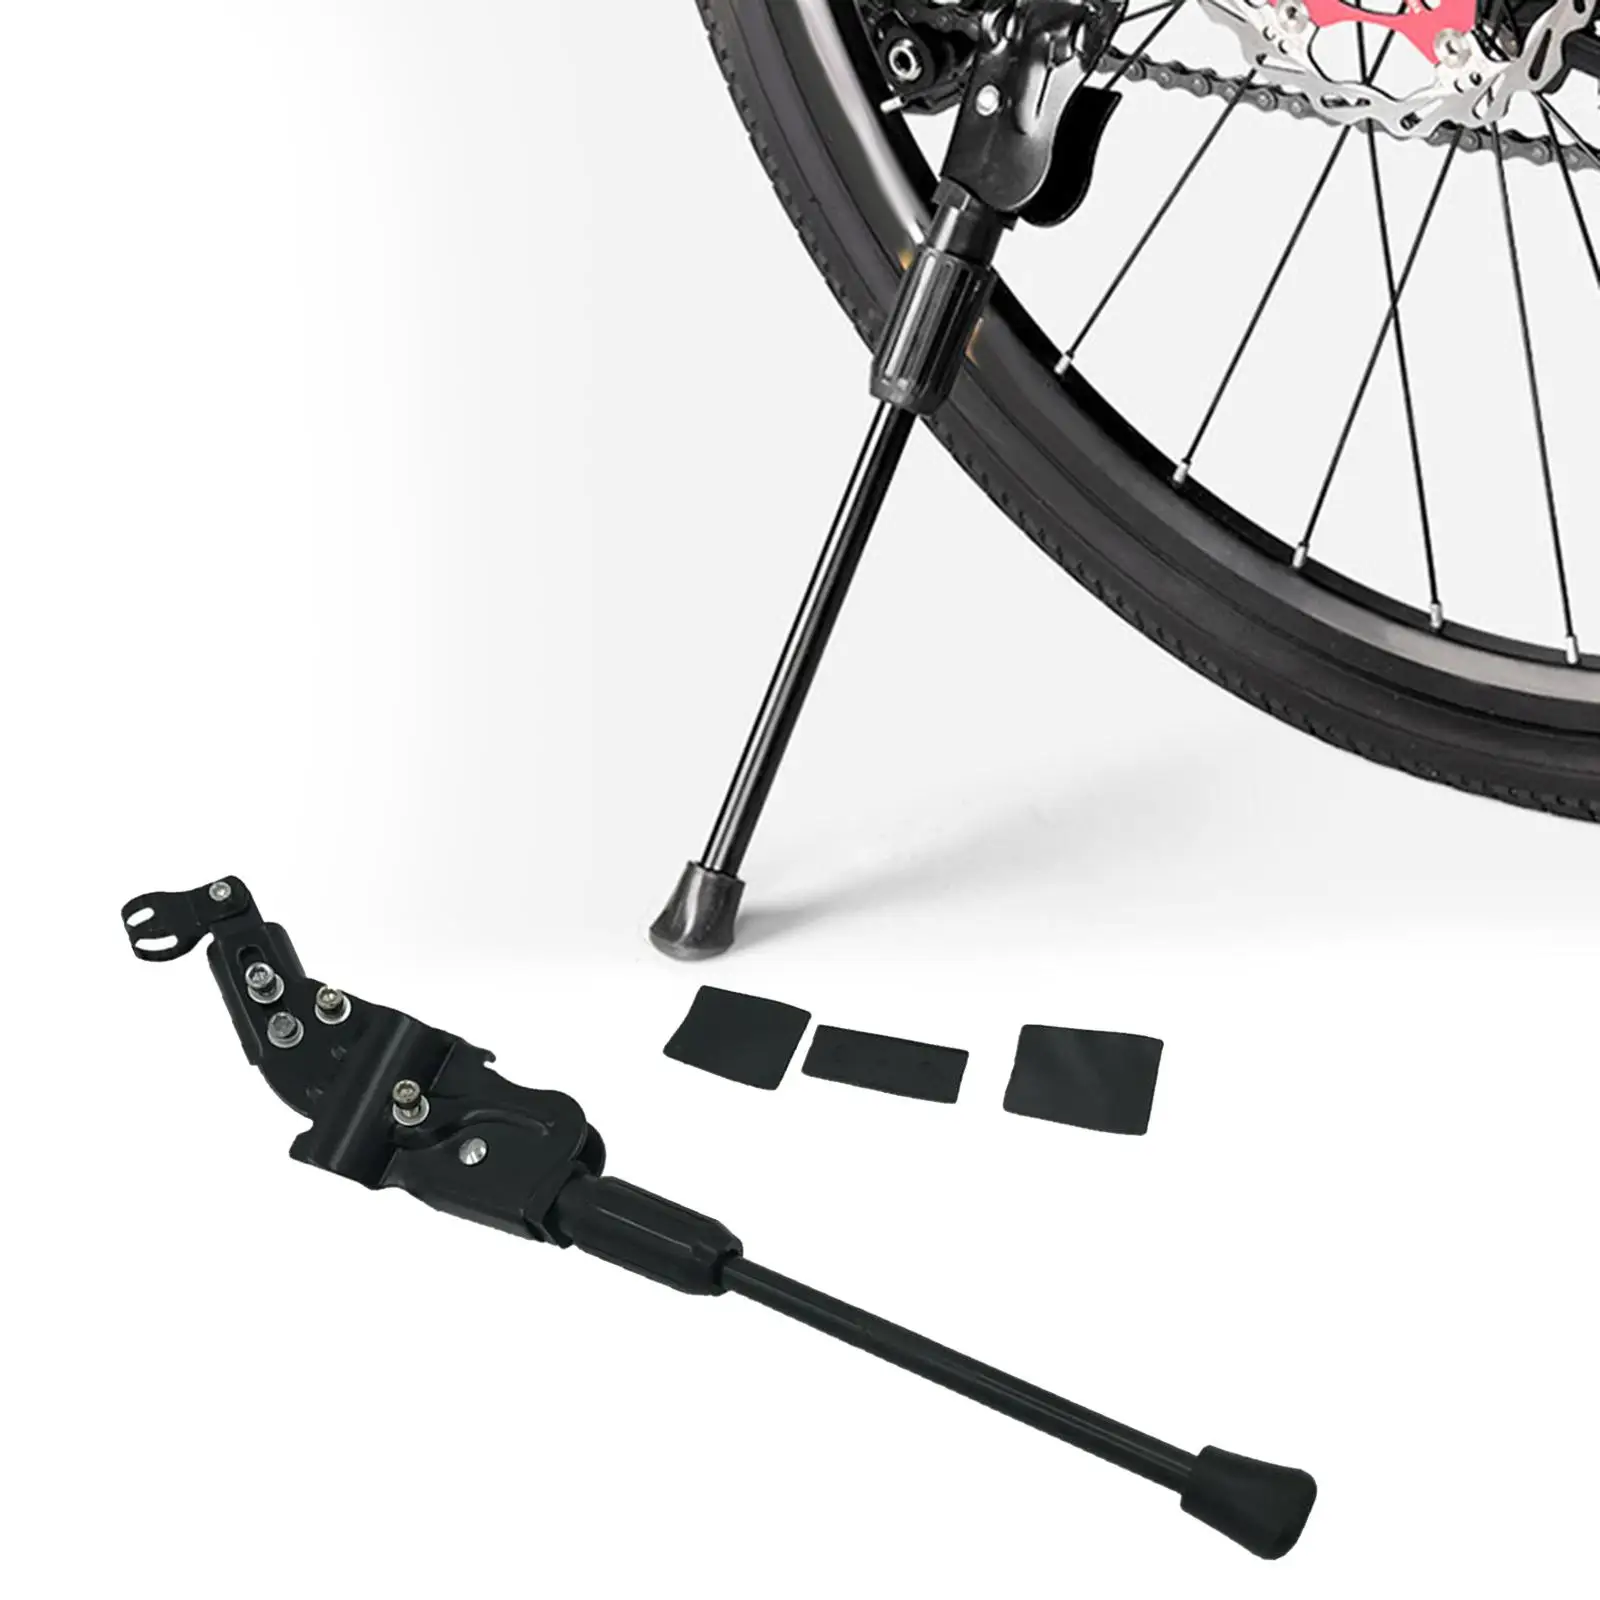 Bike Kickstand Single Side Bicycle Stand for 26 inch Mountain Bike Wear Resisting Waterproof Anti Slip Parking Stand Rear Mount